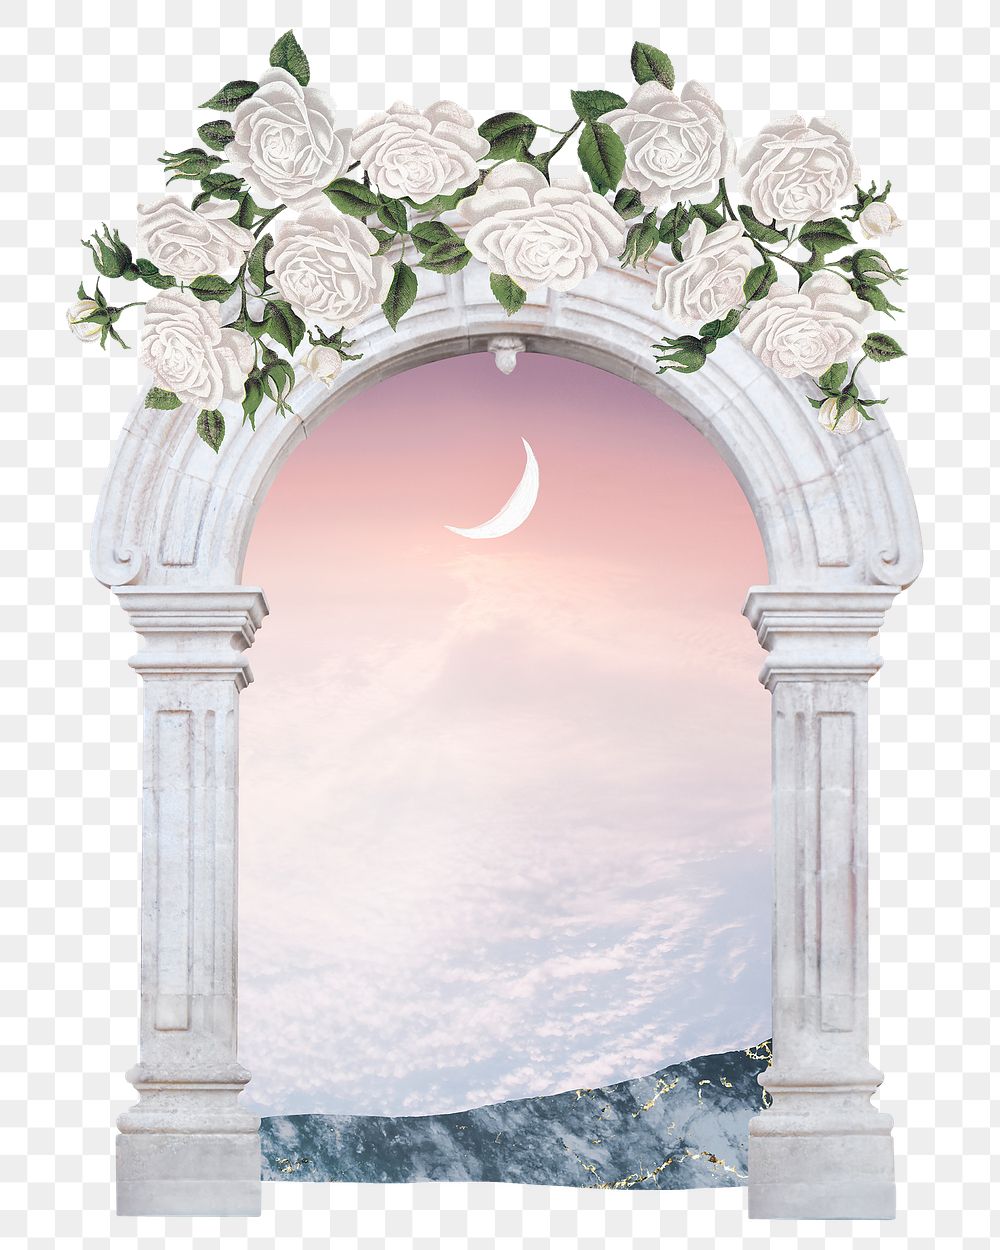 Doorway sky aesthetic png sticker, transparent background